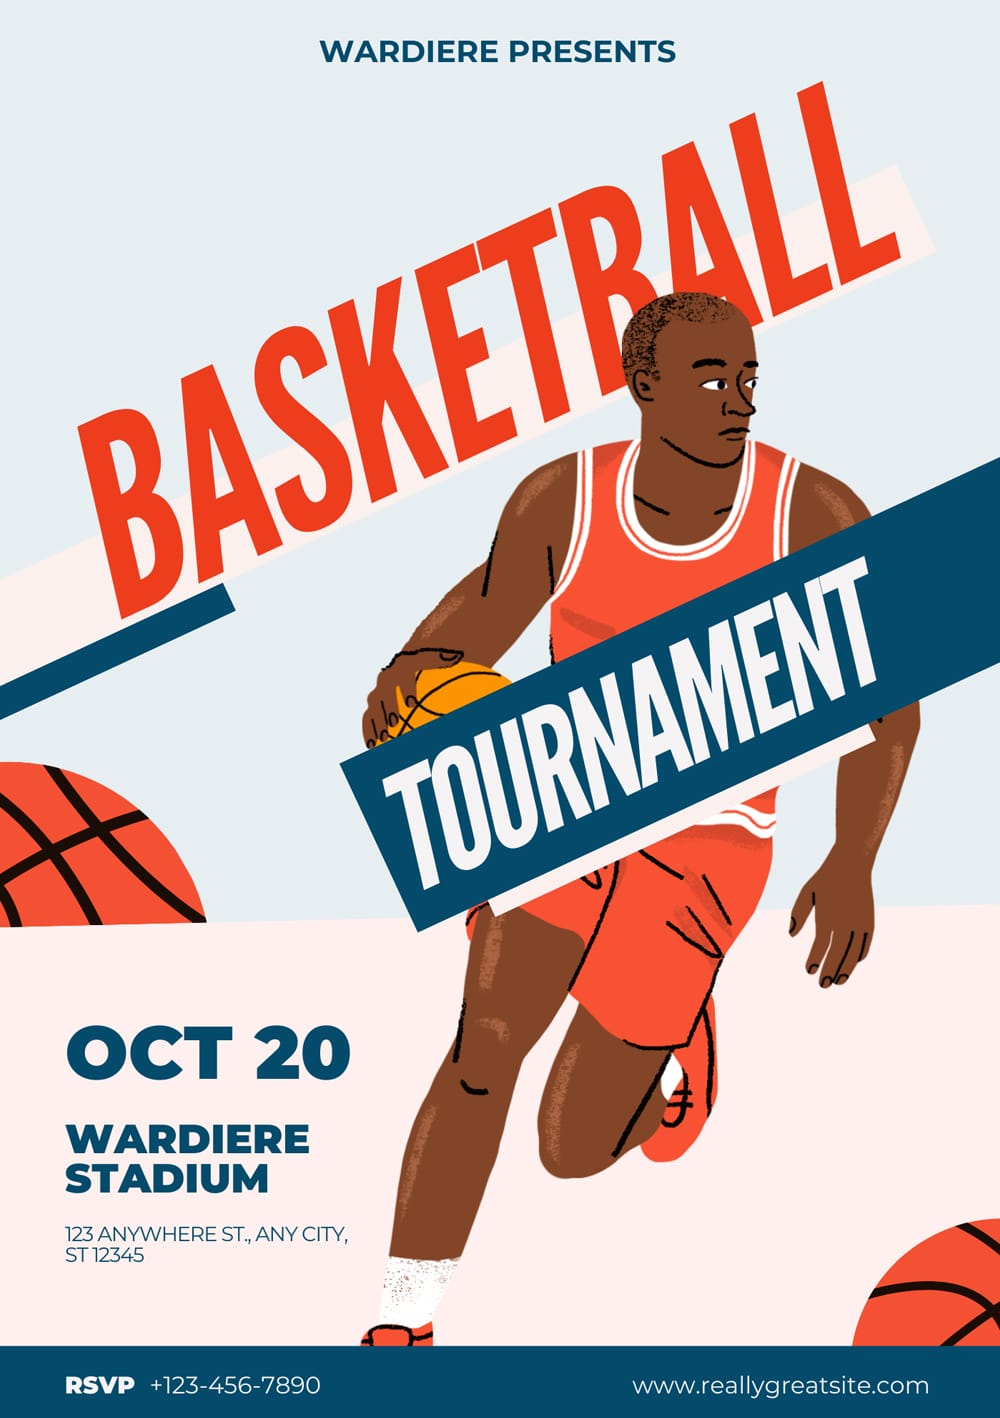 Illustrative and Modern Basketball Tournament Flyer Template